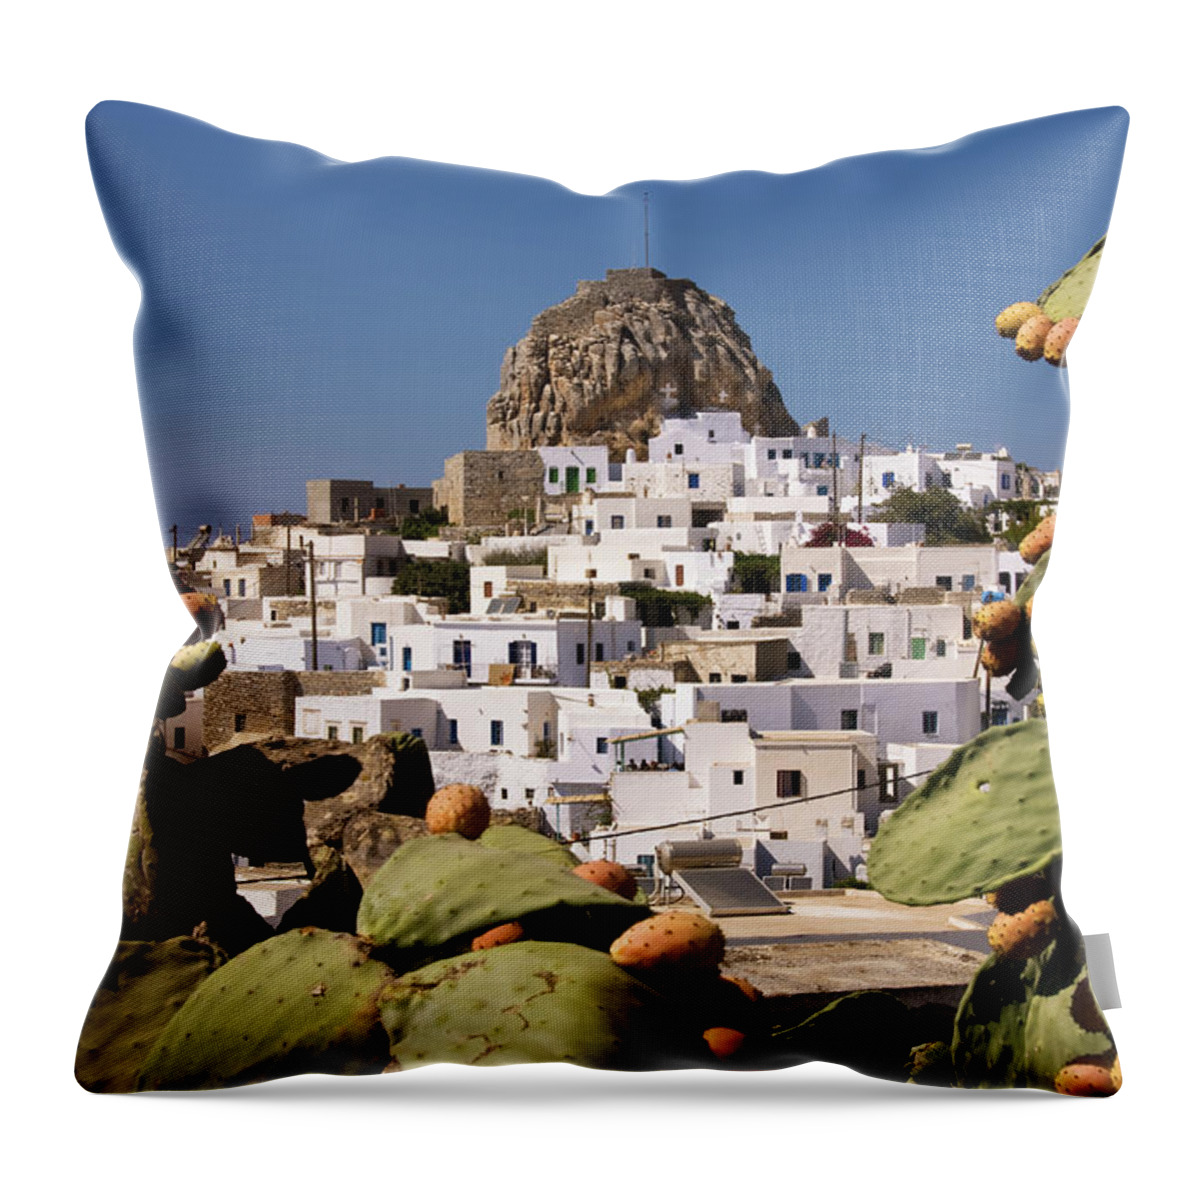 Greece Throw Pillow featuring the photograph Chora Amorgos by Hpuschmann